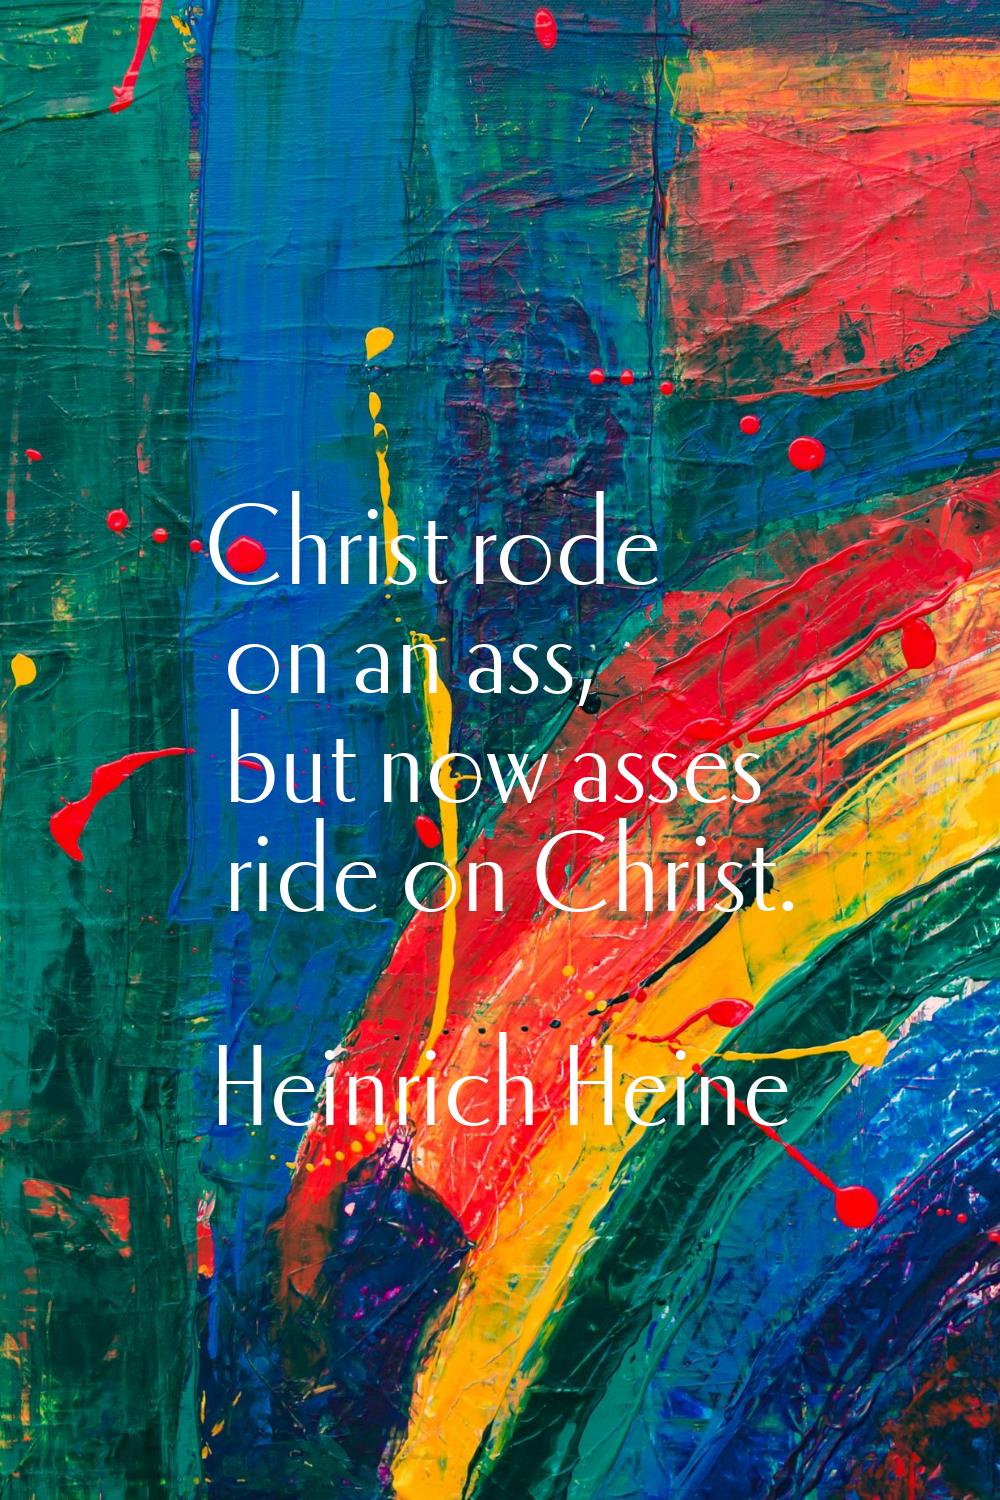 Christ rode on an ass, but now asses ride on Christ.